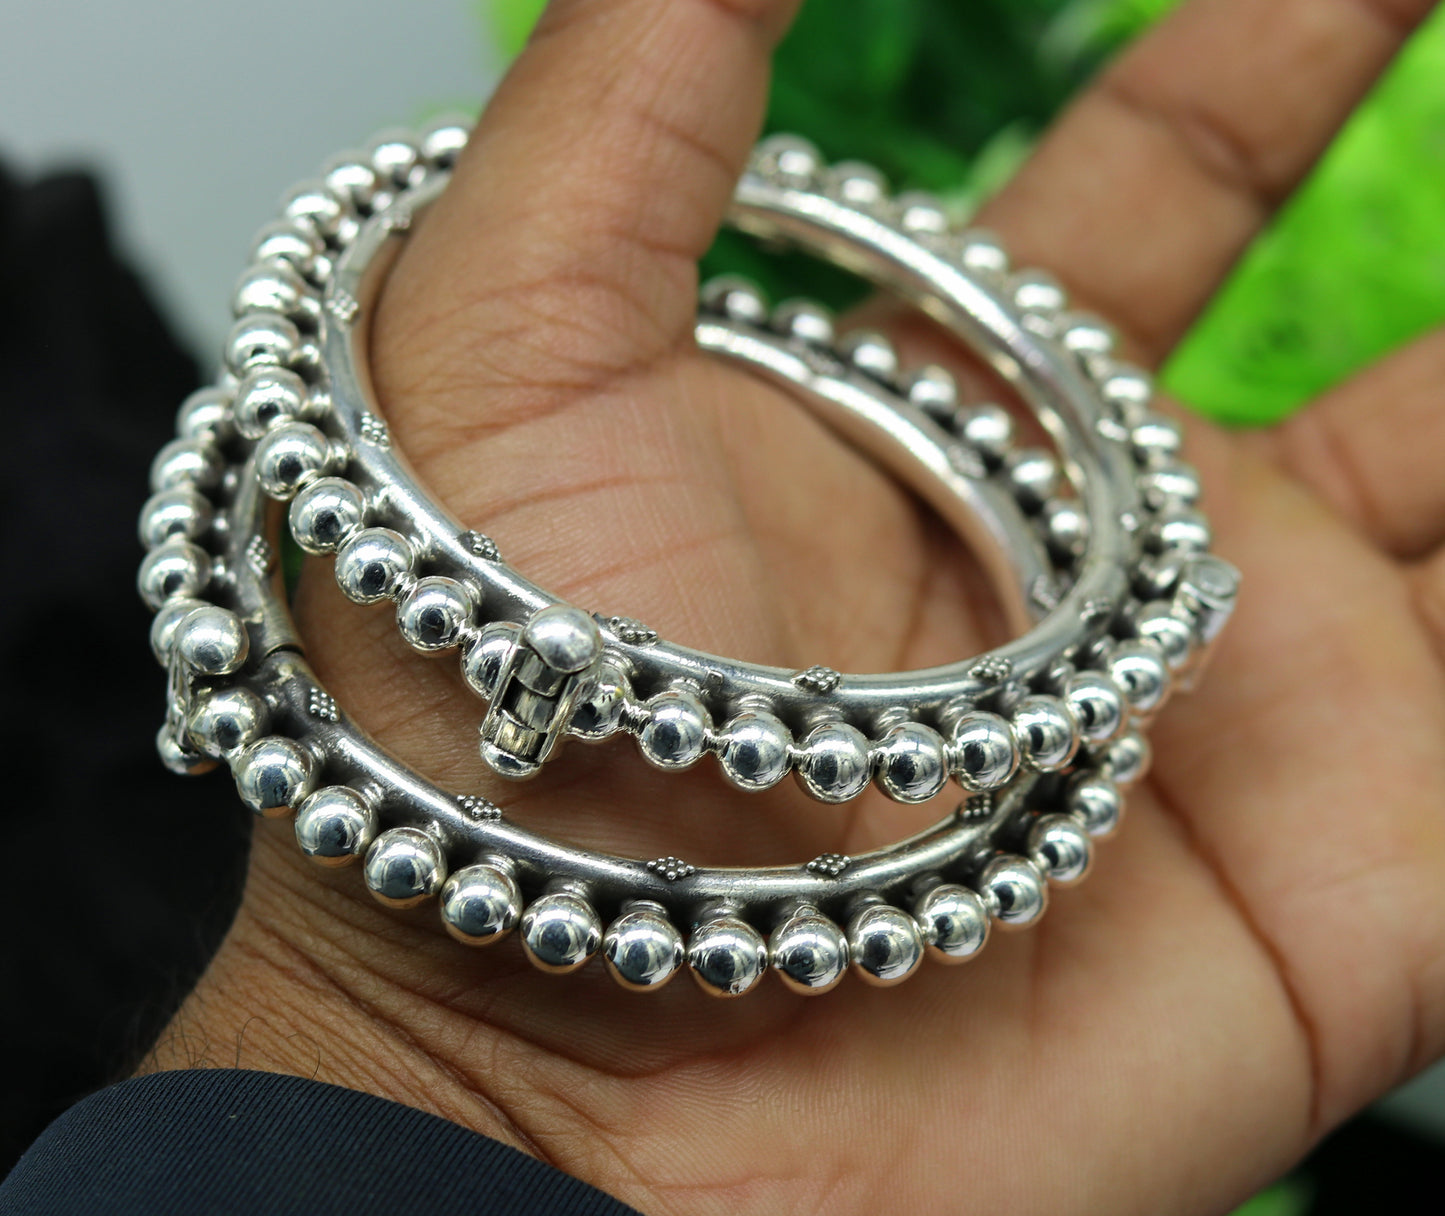 925 sterling silver handmade gorgeous customized design vintage antique design bangle bracelet kada, tribal bridesmaid jewelry gift nba99 - TRIBAL ORNAMENTS